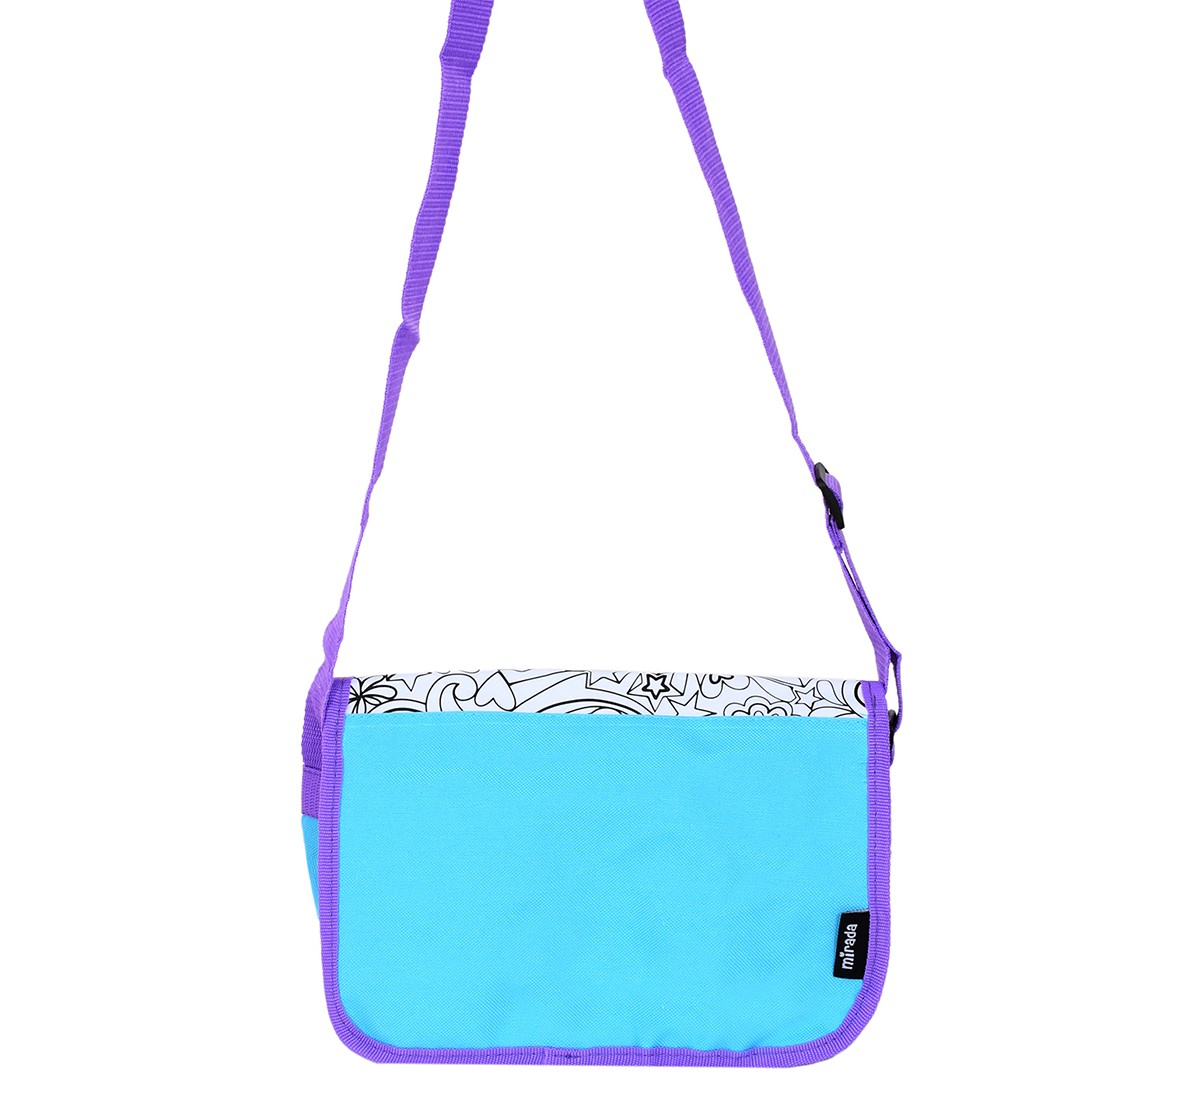 Mirada Color Your Own Peace Sling Bag, 3Y+, Multicolour